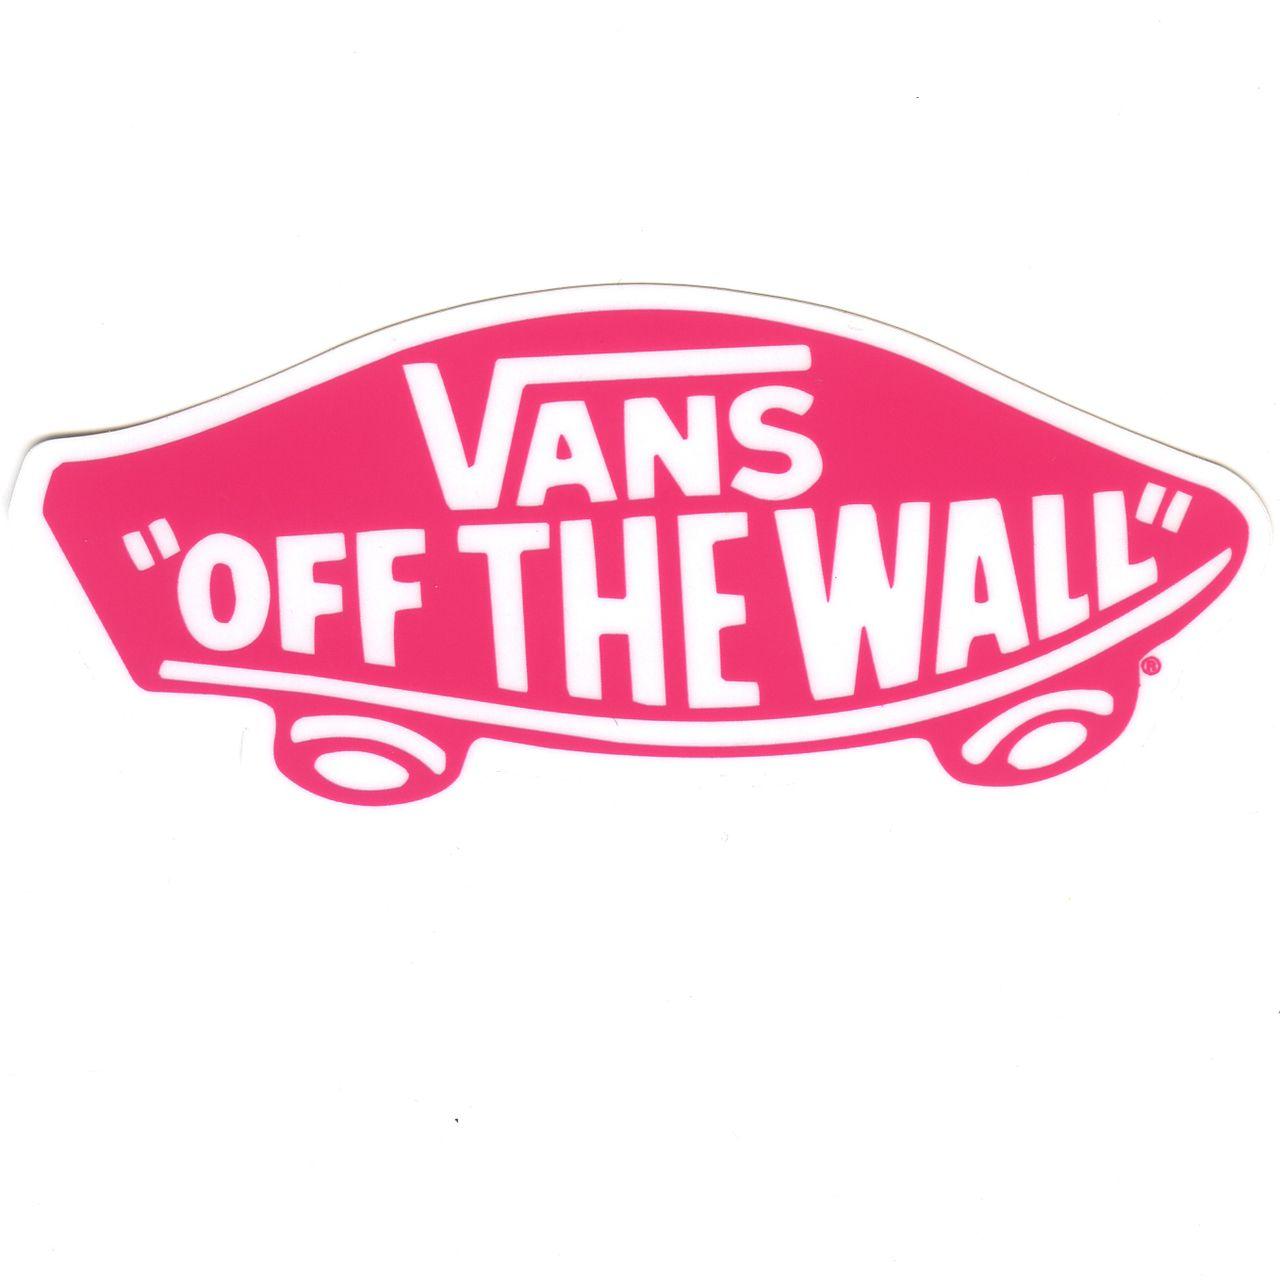 Buy > off the wall vans pink > in stock